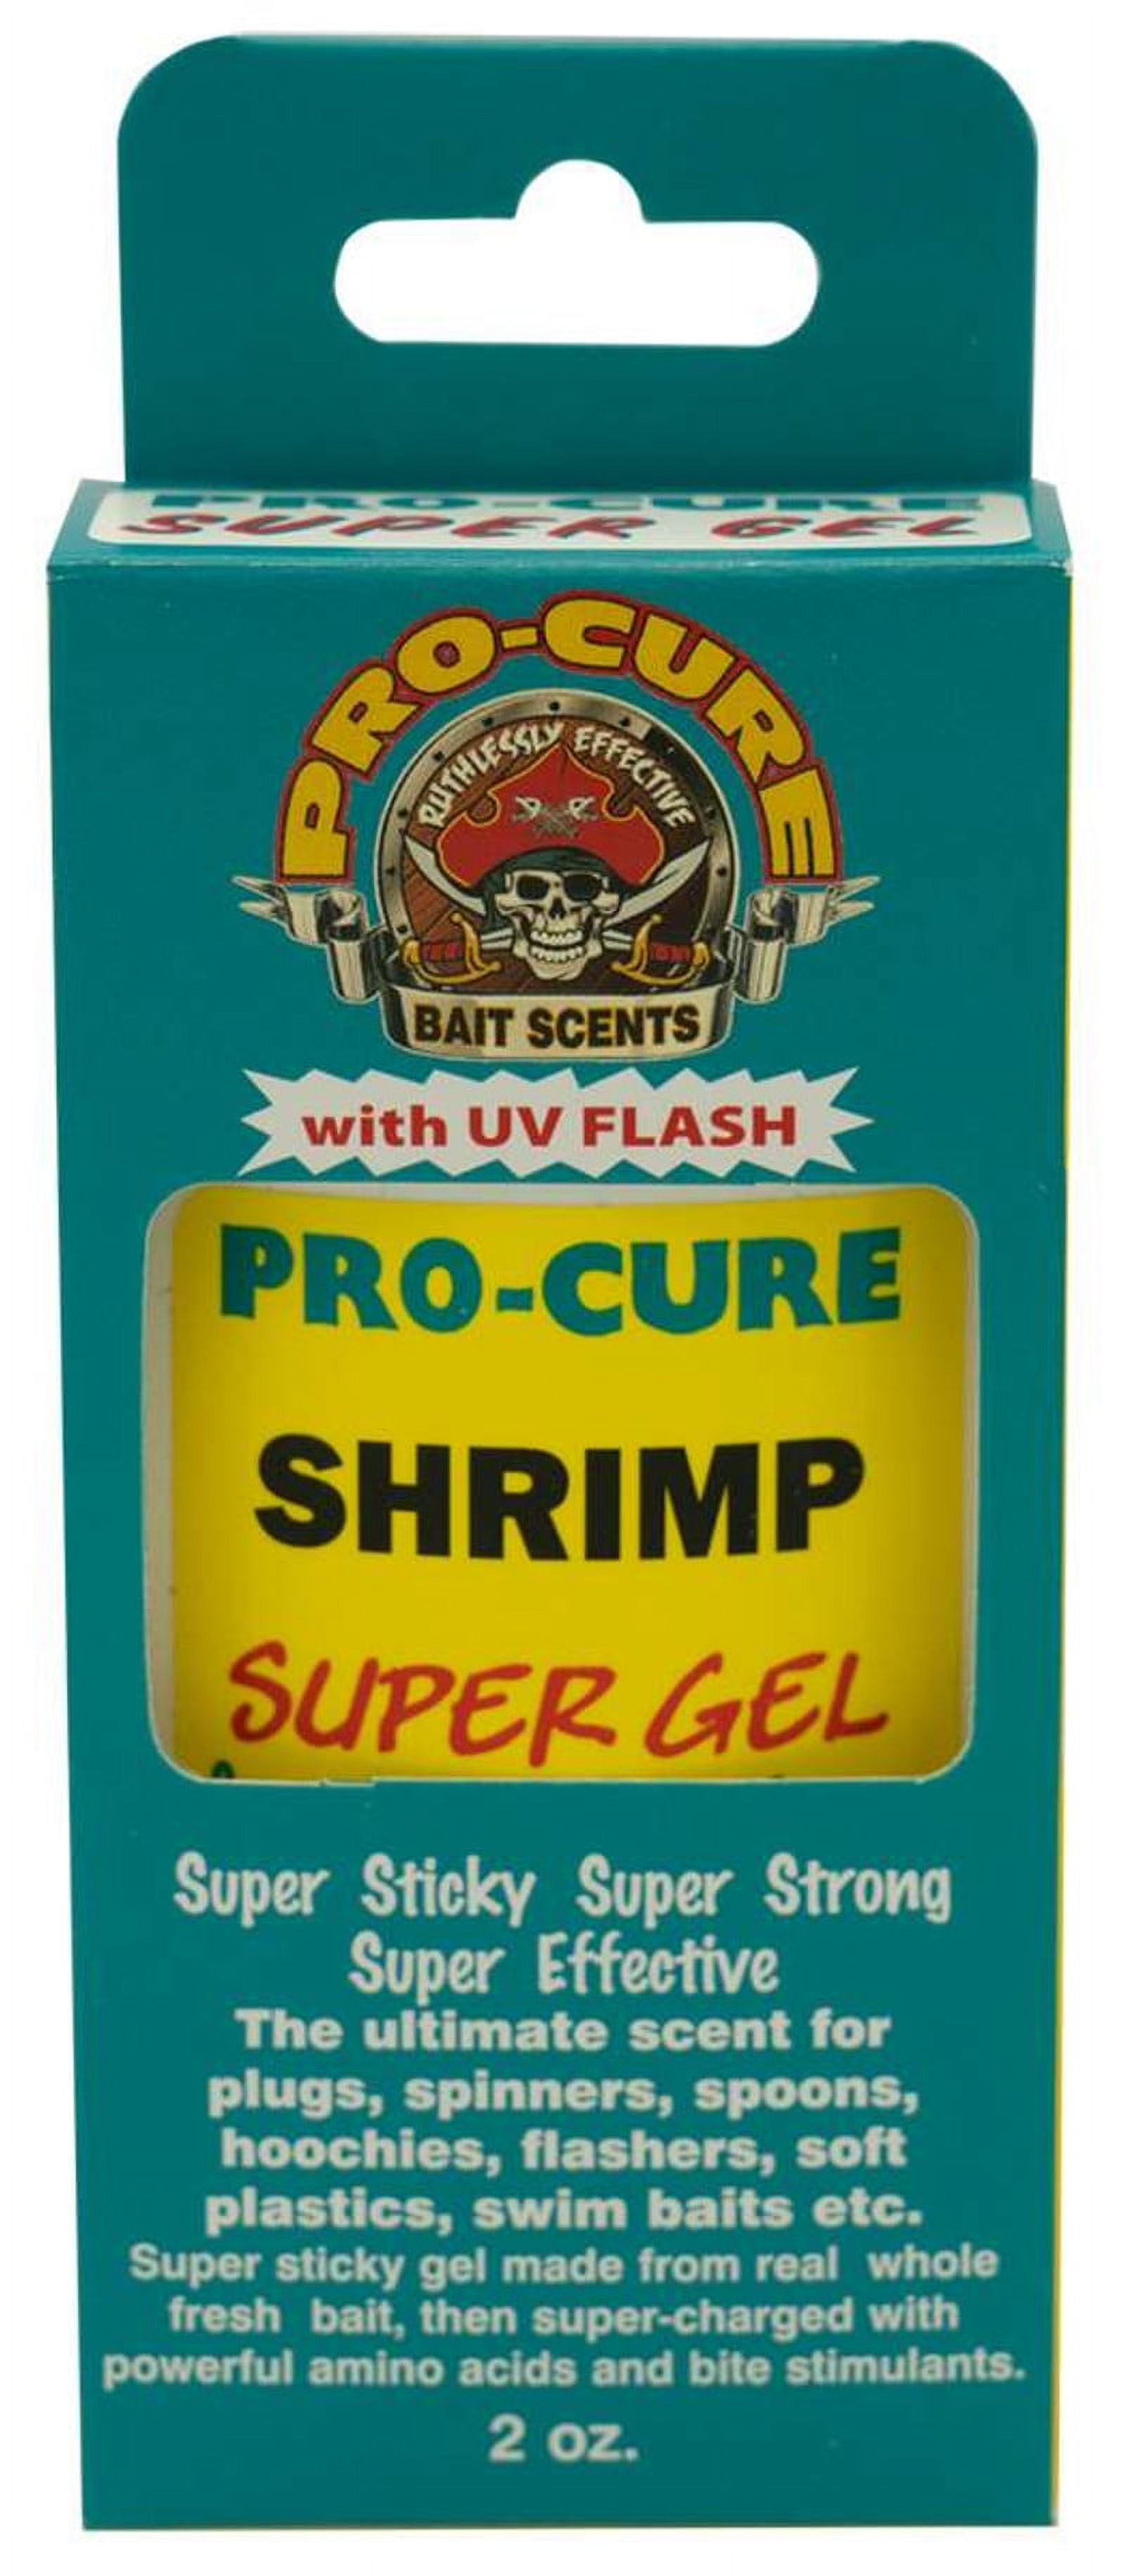 Pro Cure Shrimp Super Gel 2 oz.